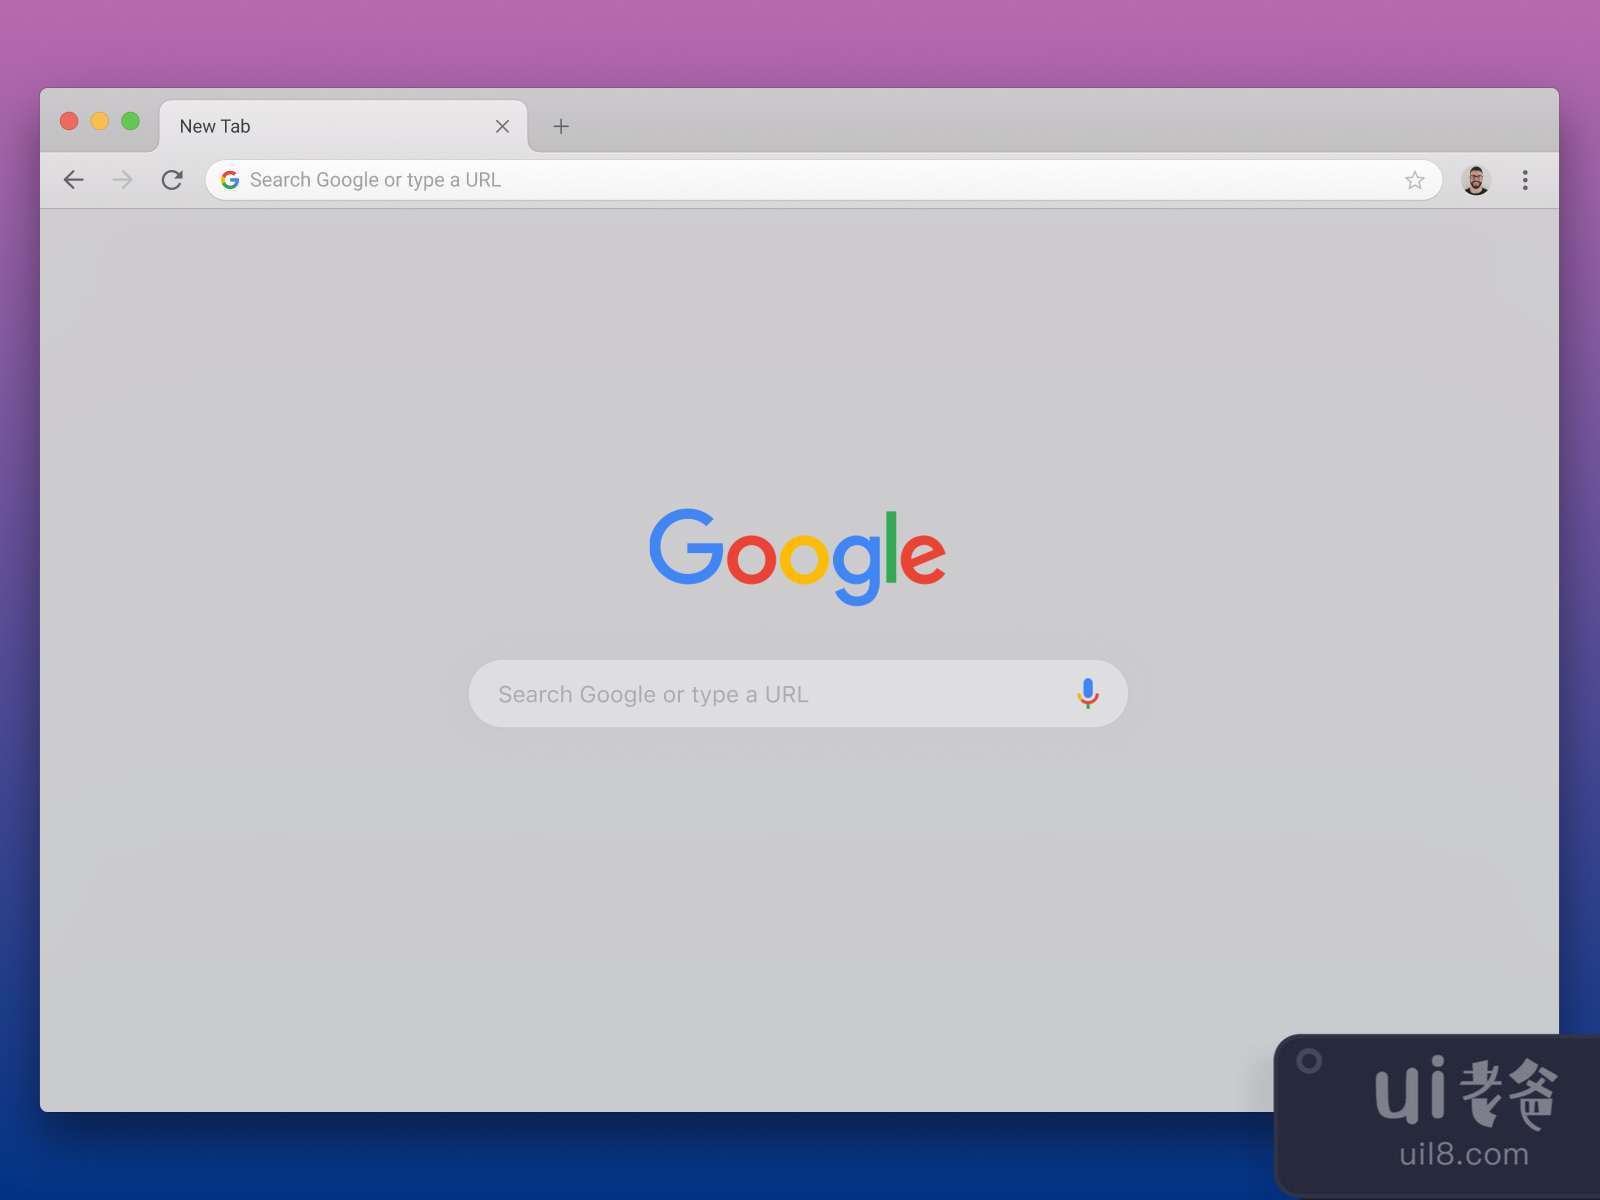 New Chrome macOS for Figma and Adobe XD No 2